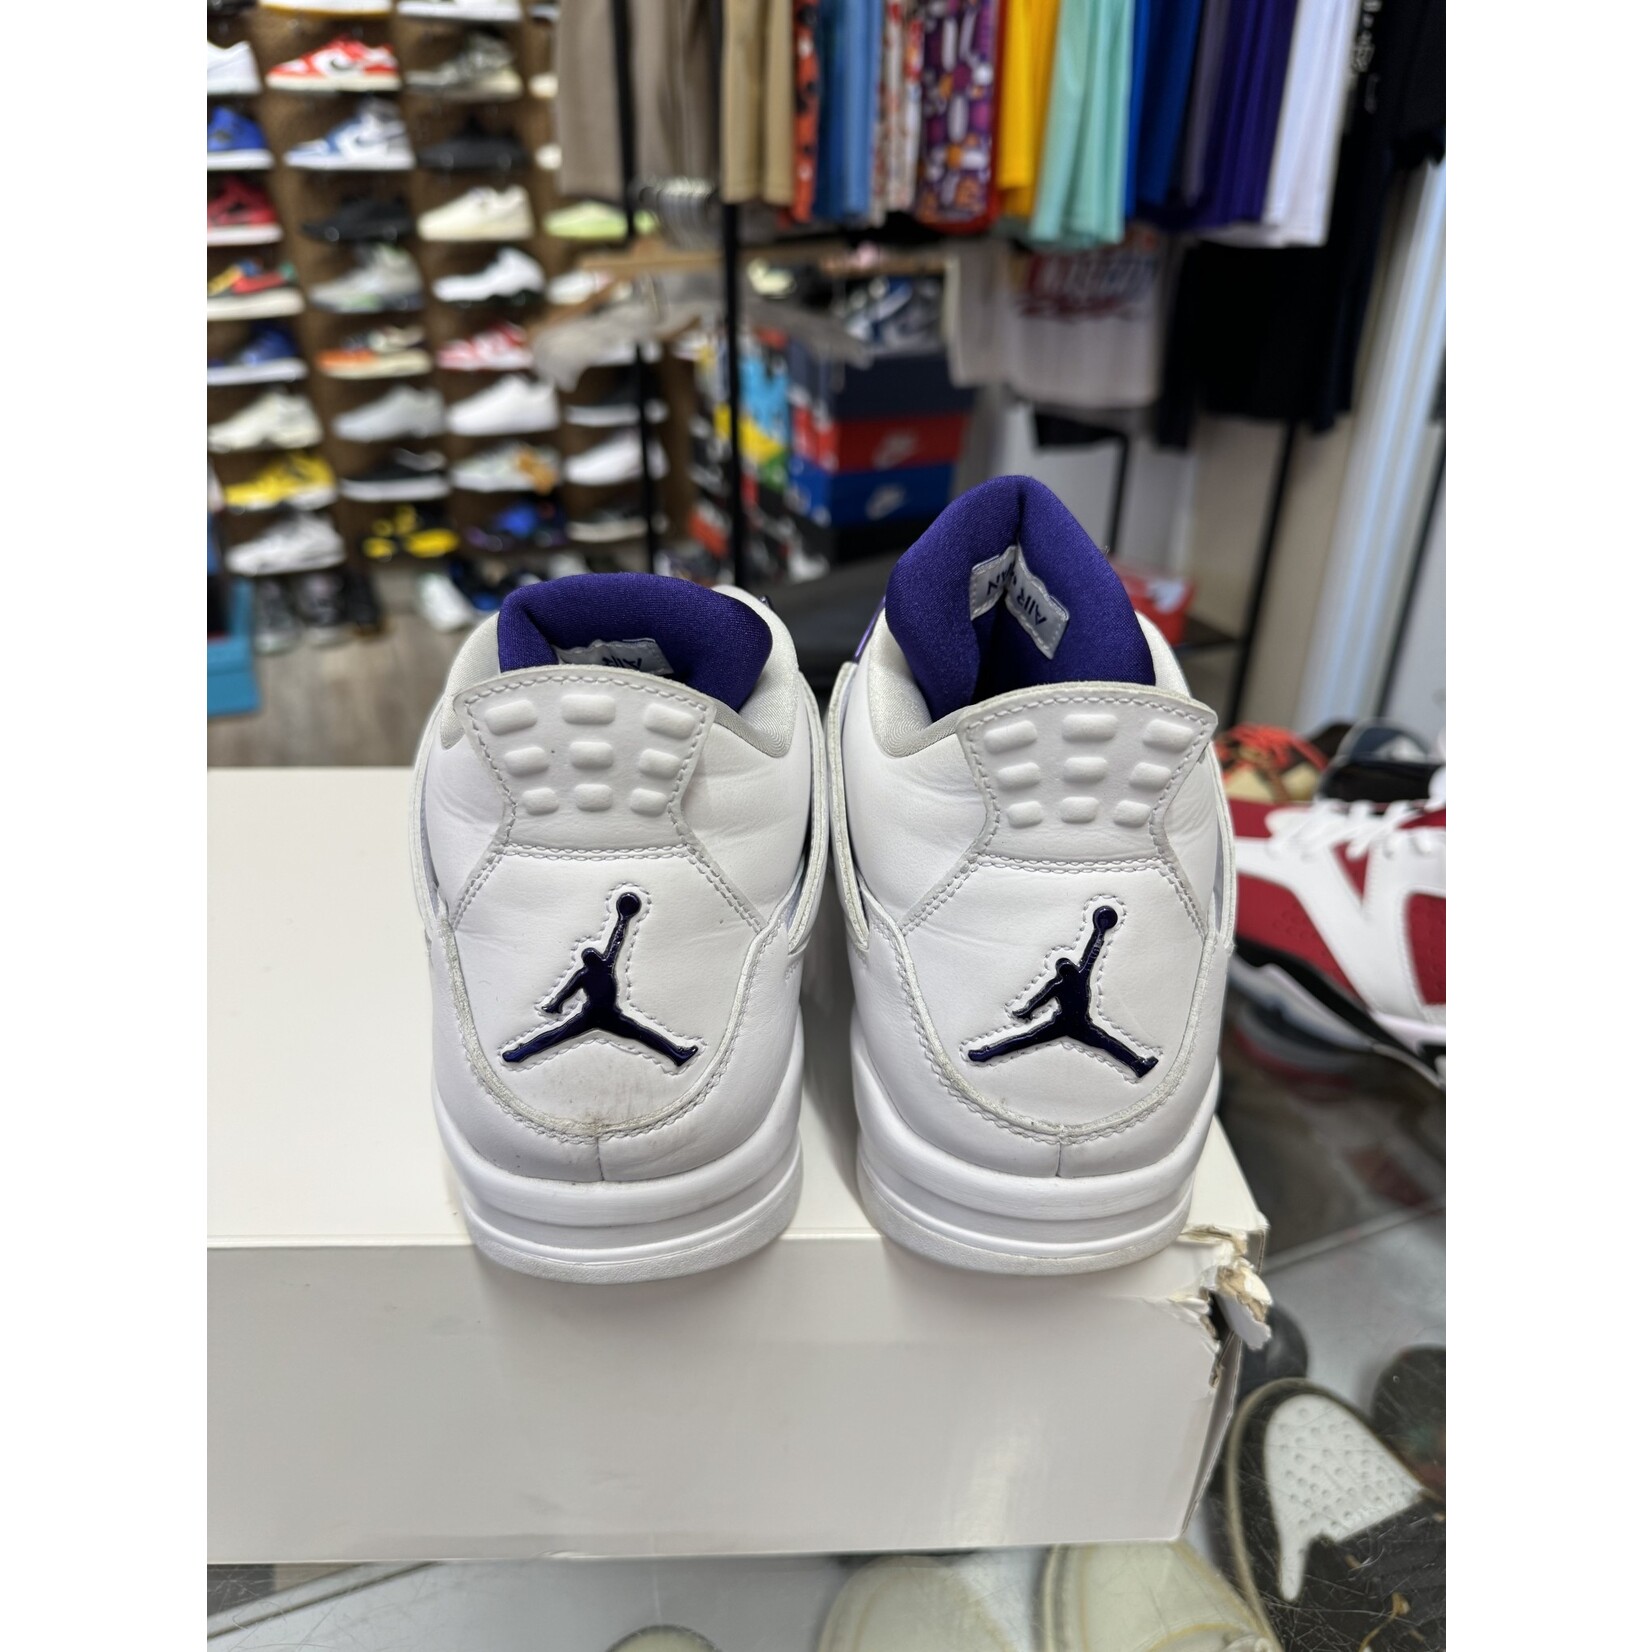 Jordan Jordan 4 Retro Metallic Purple Size 10.5, PREOWNED